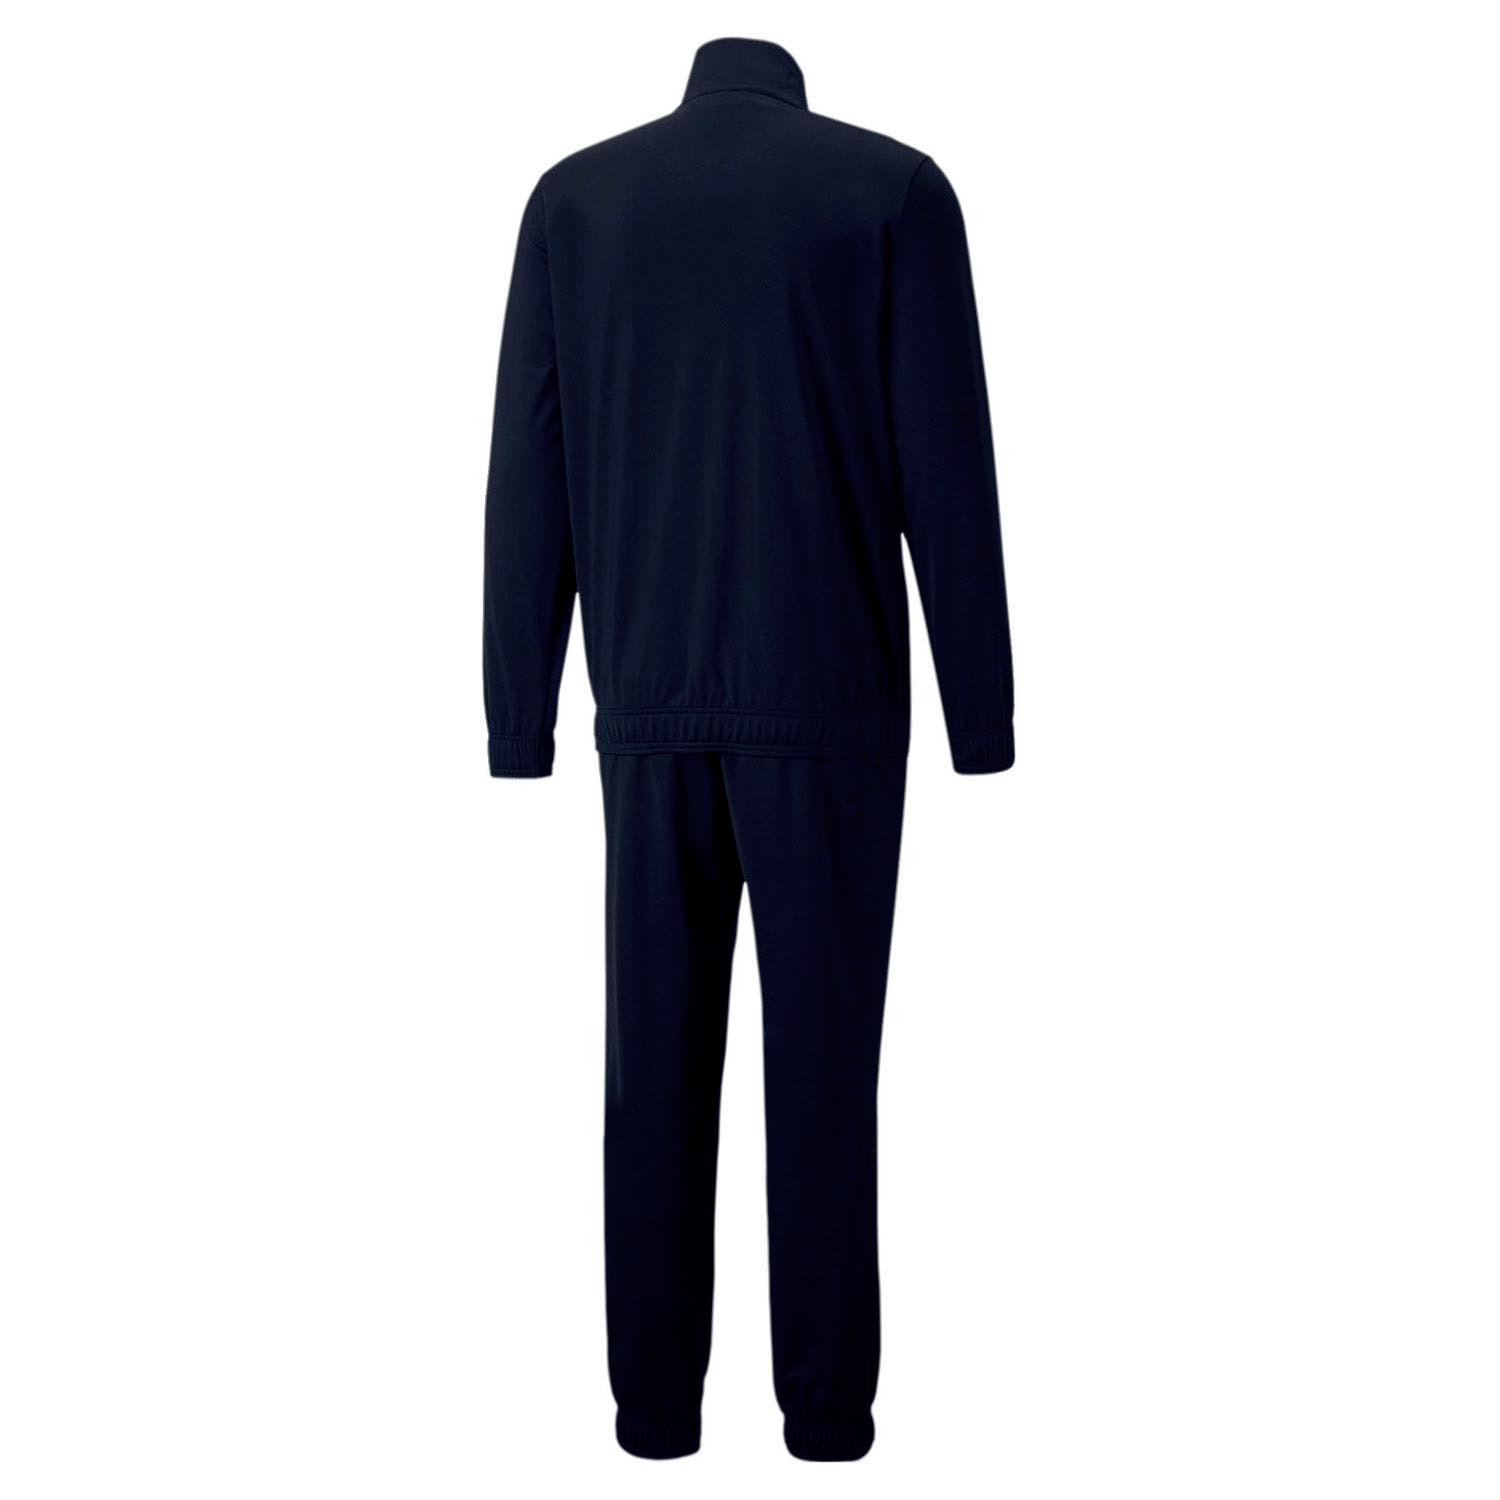 PUMA Herren Poly Suit CL Trainingsanzug Jogginganzug 845844 blau 